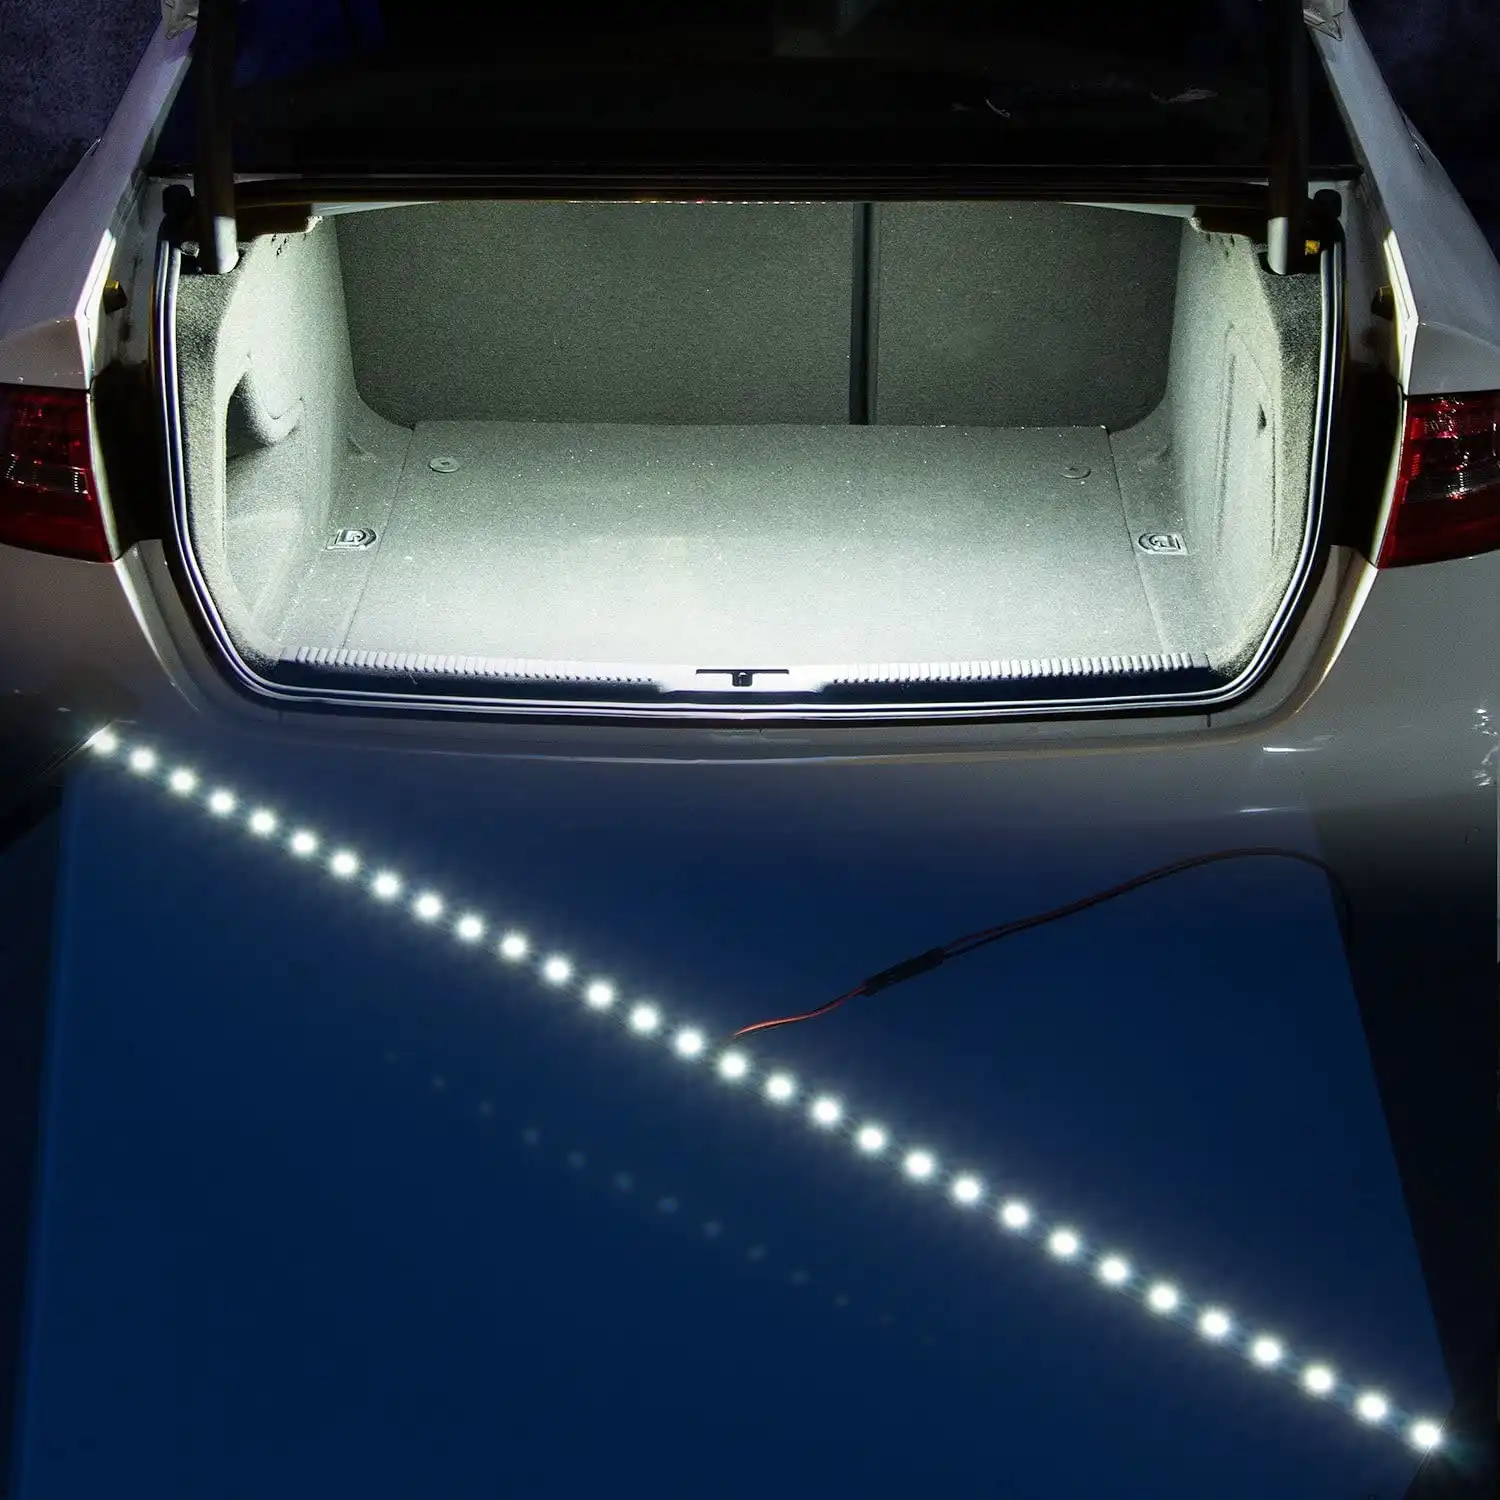 YIJINSHENG 30 SMD 5050 LED Strip Light For Car Trunk Cargo Area or Interior Illumination Decoration, Xenon White, Auto Accessories